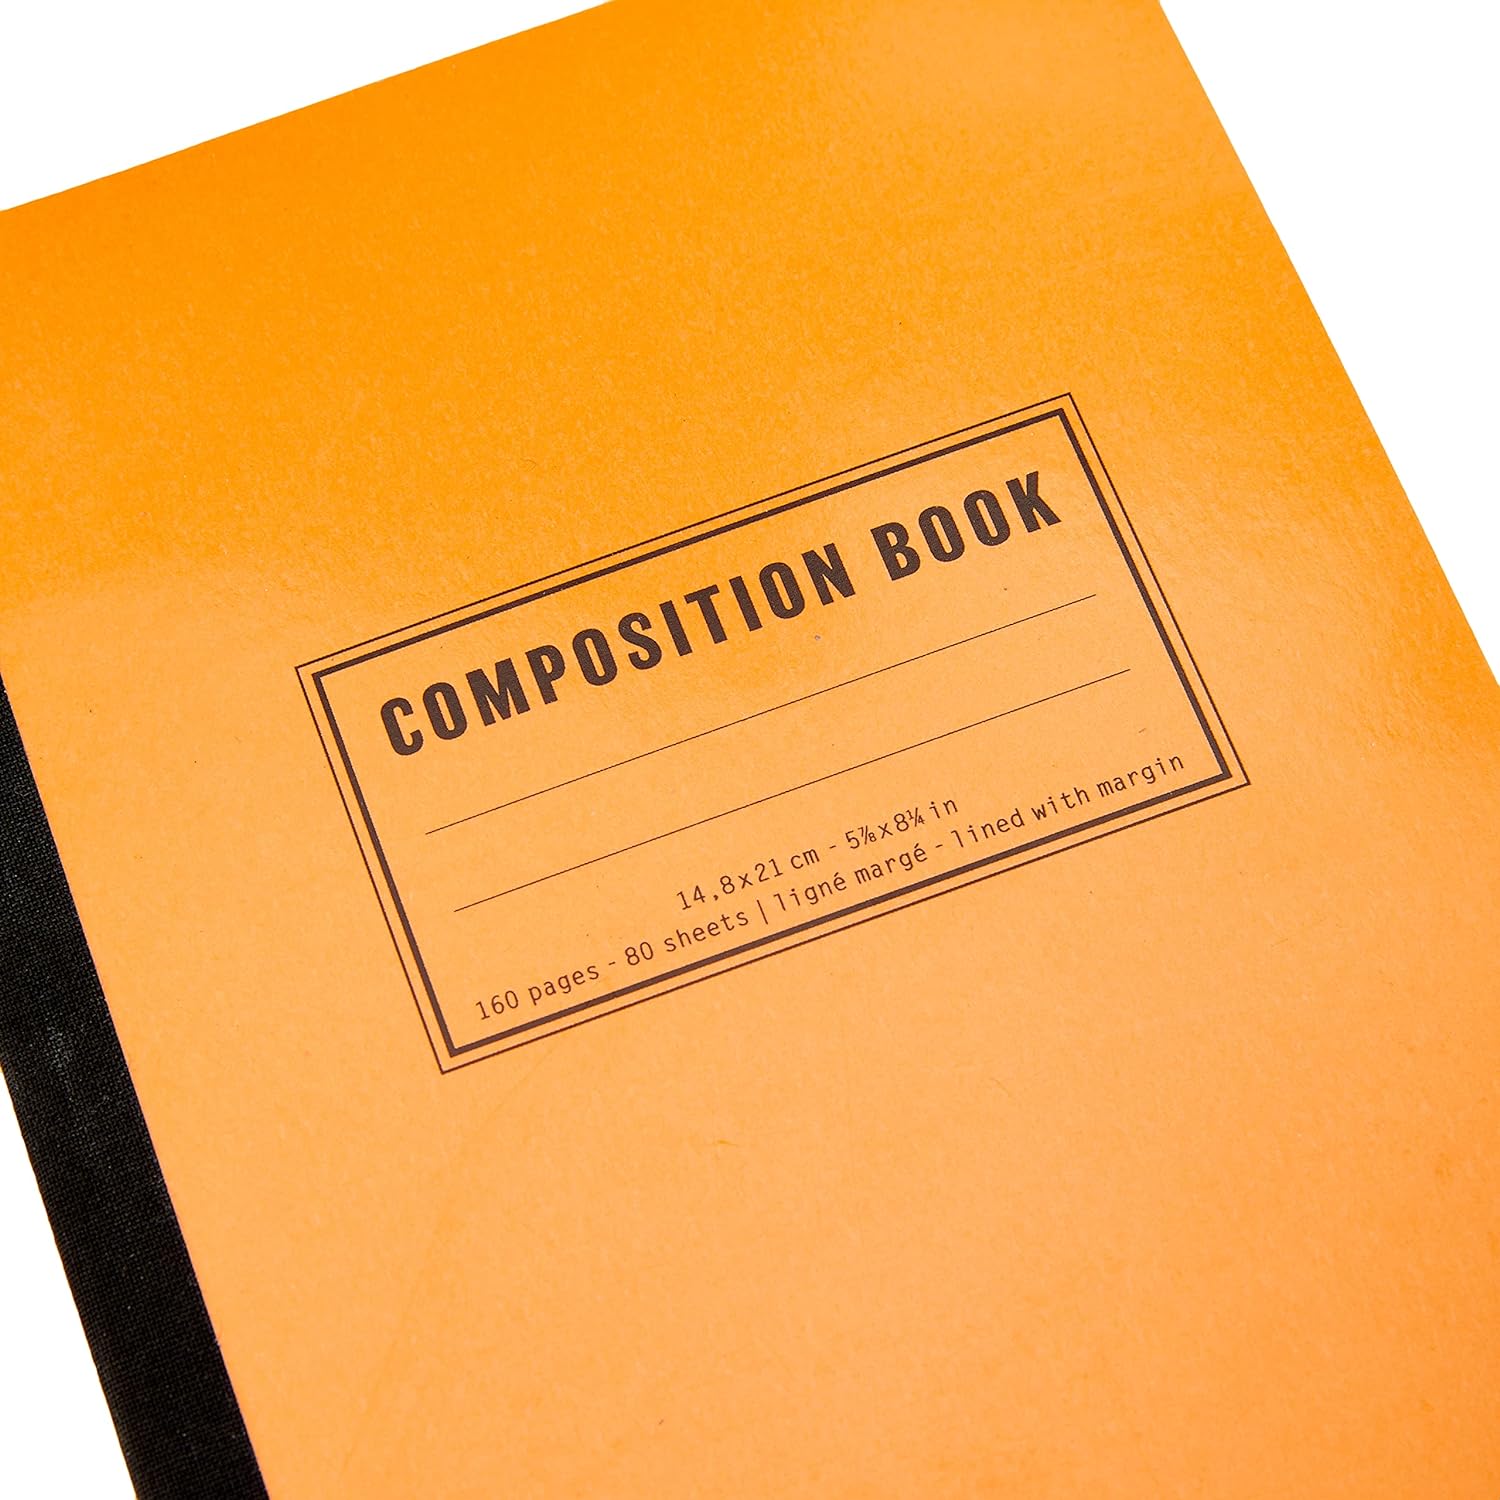 RHODIA Composition Book A5 148x210mm Lined+Margin Orange